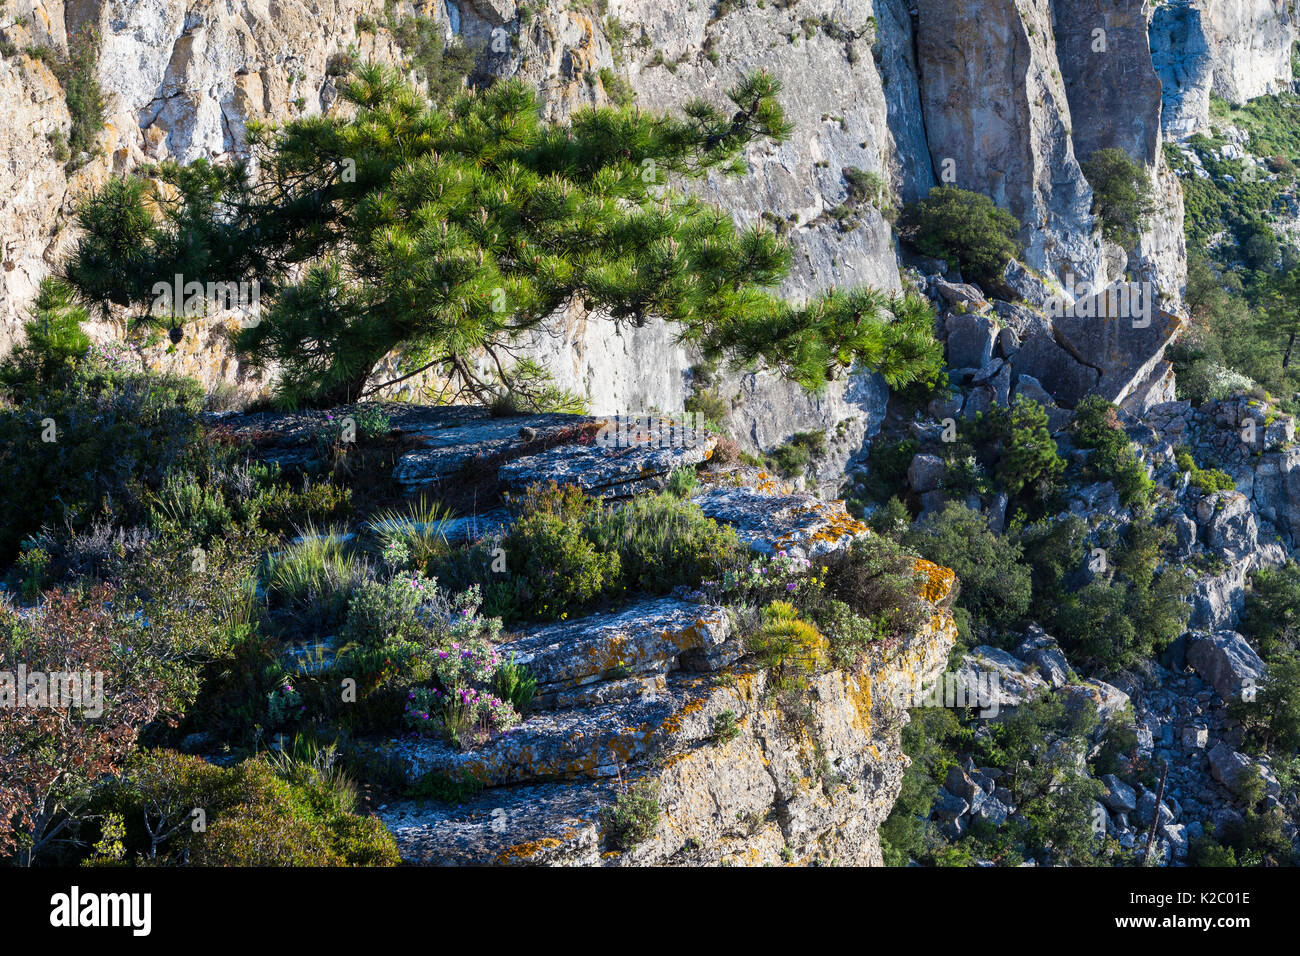 Europeo de pino negro (Pinus nigra) que crecen en acantilados, Pradell-La Argentera zona cordillerana de Interés Natural, Tarragona, Cataluña, España, en mayo de 2013. Foto de stock